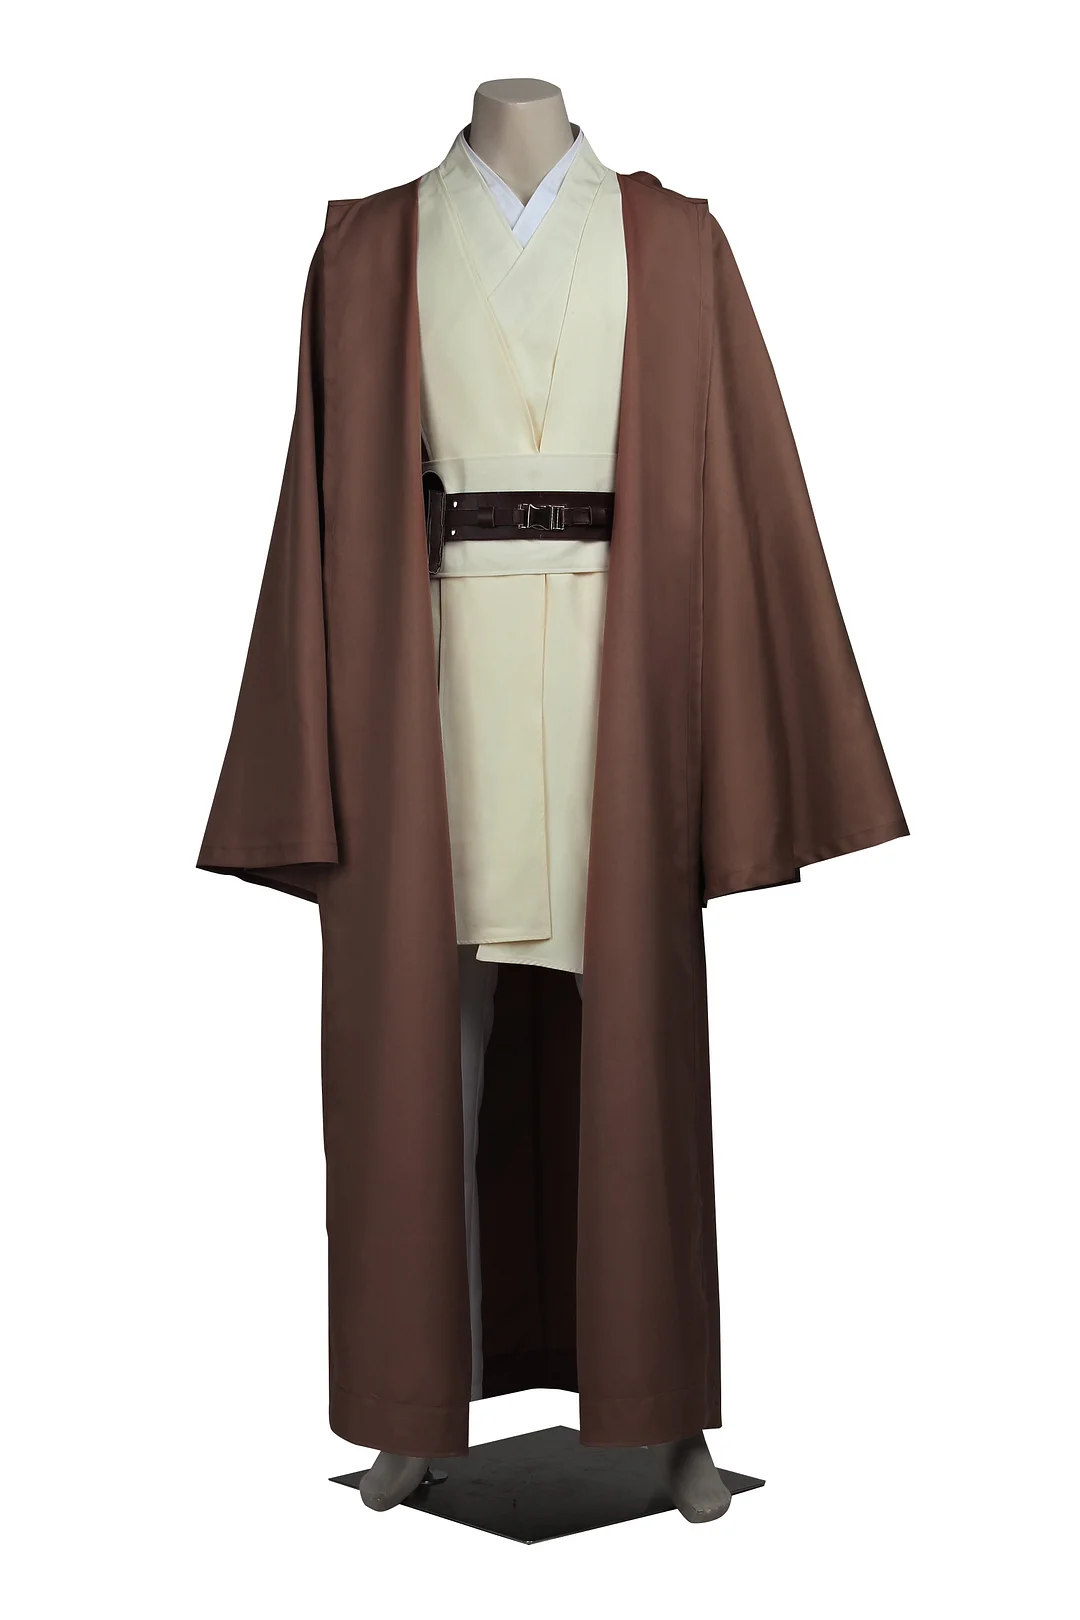 Star Wars Old Obi Wan Kenobi Costume